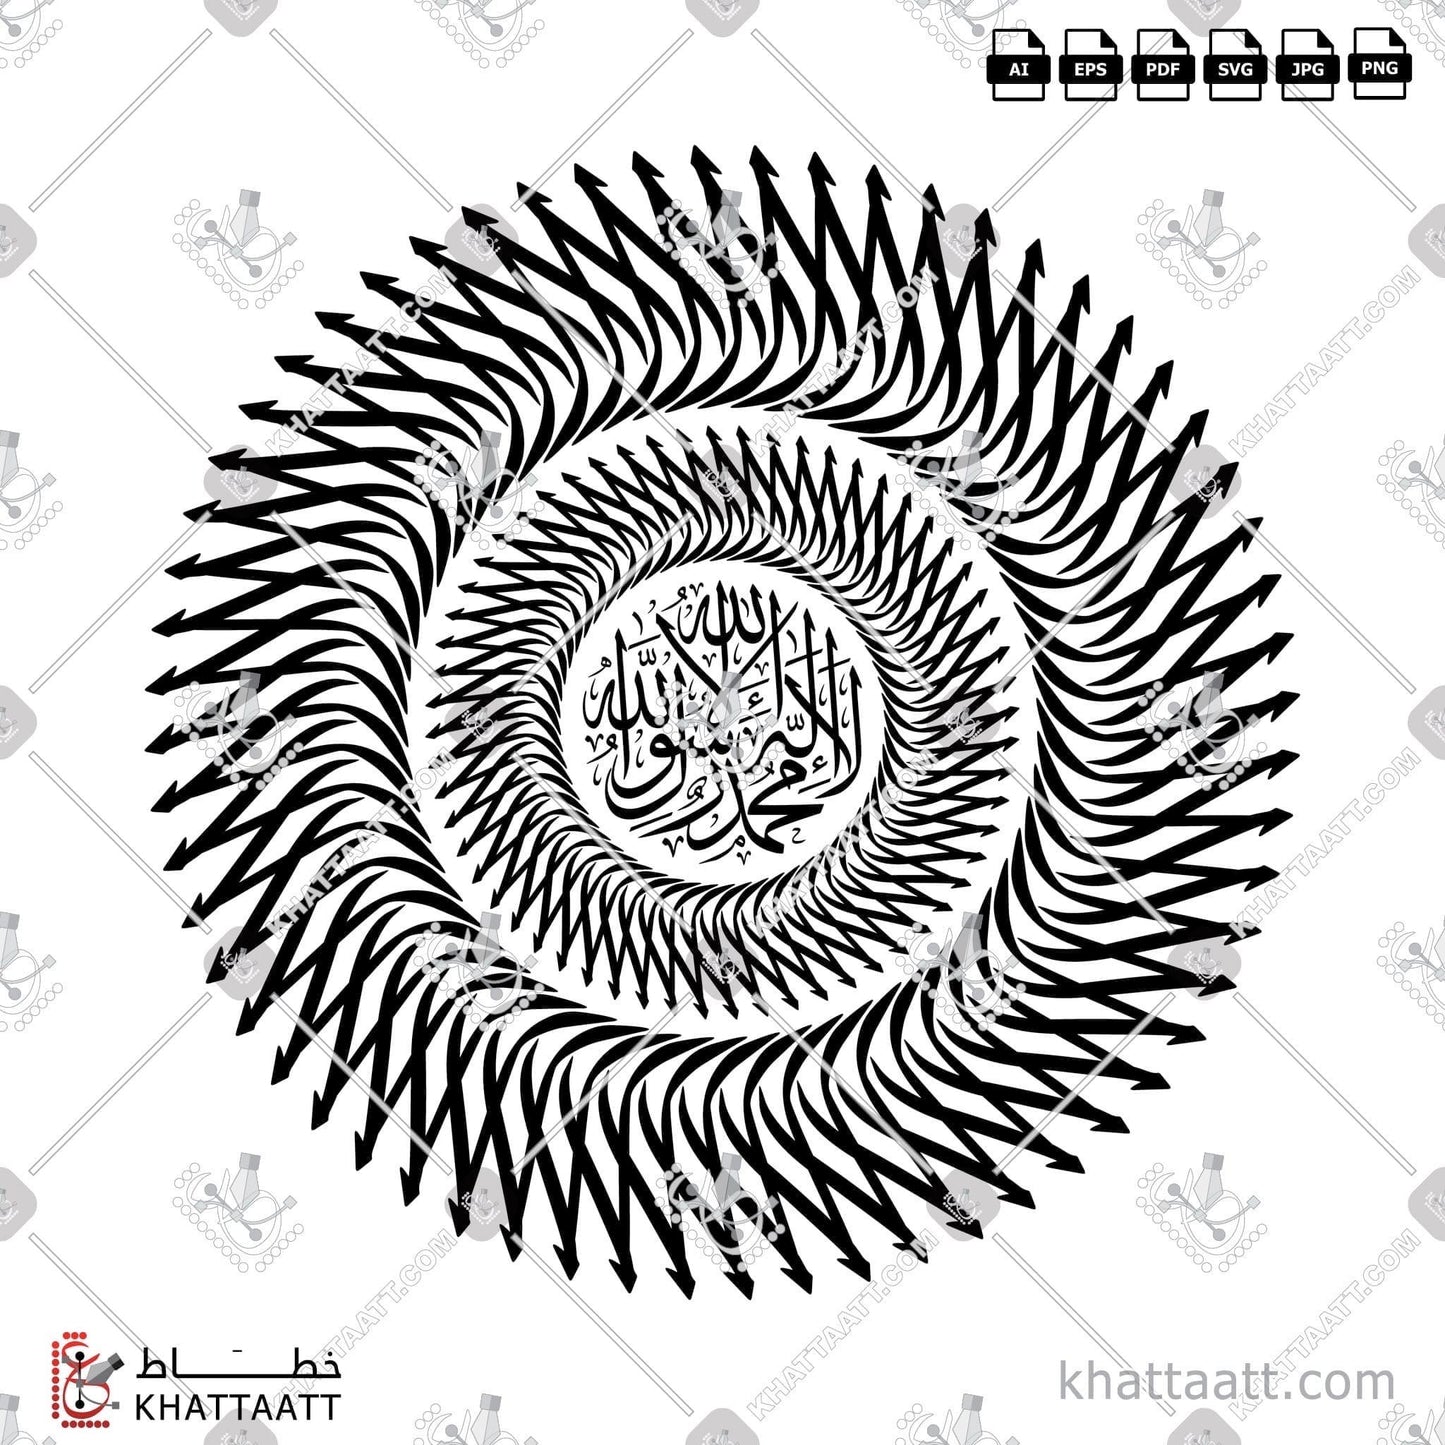 Download Arabic Calligraphy of لا إله إلا الله محمد رسول الله in Thuluth - خط الثلث in vector and .png